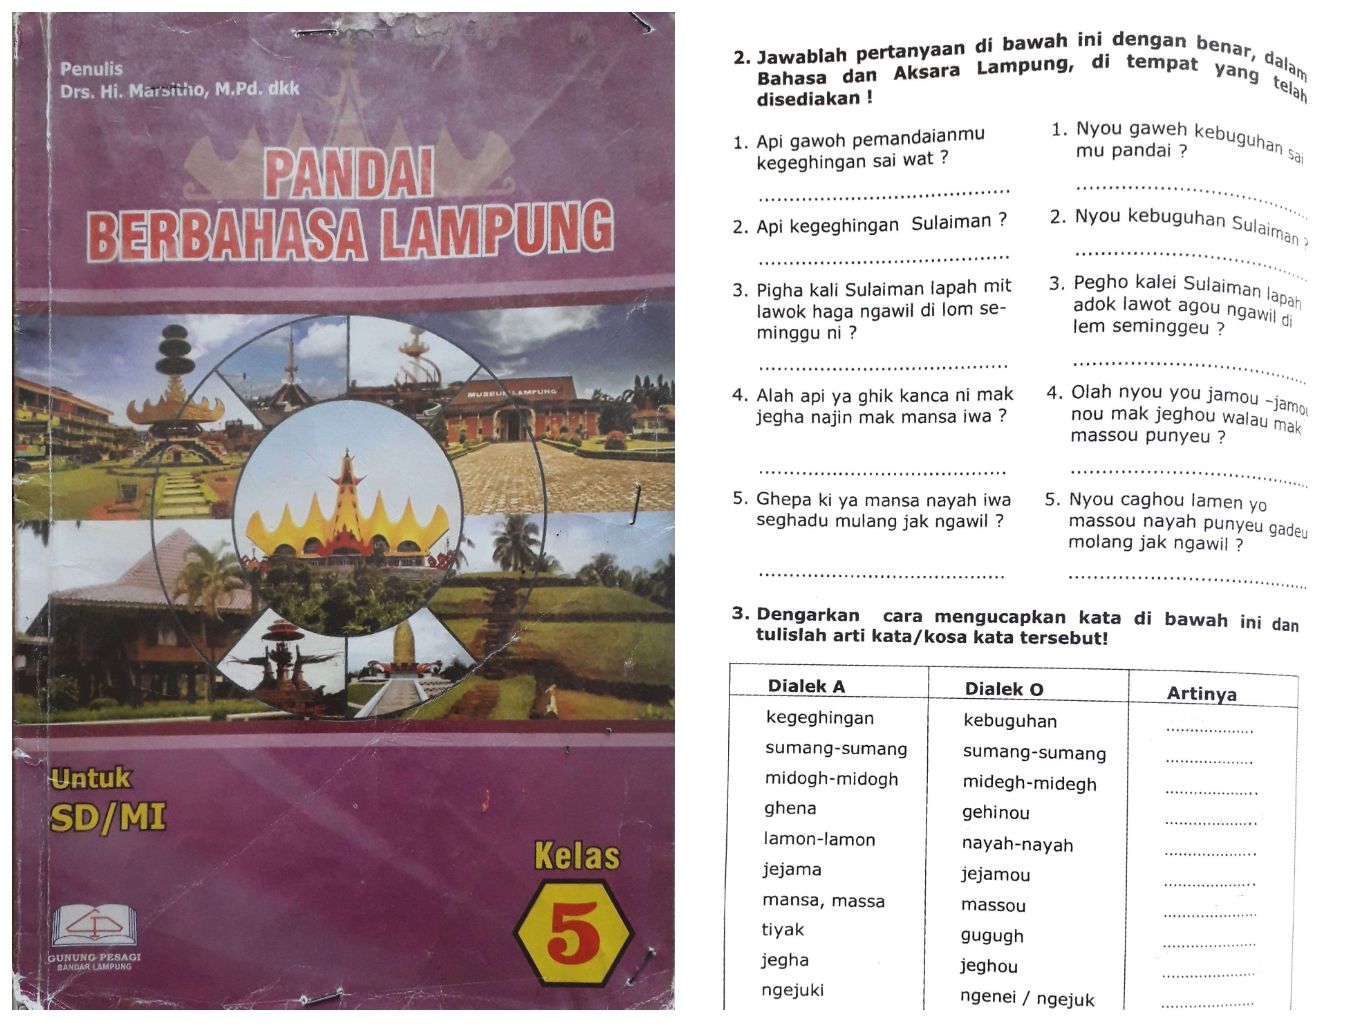  Kunci jawaban Pandai Berbahasa Lampung kelas 5 SD halaman 18 arti kata dialek A kegeghingan sumang-sumang